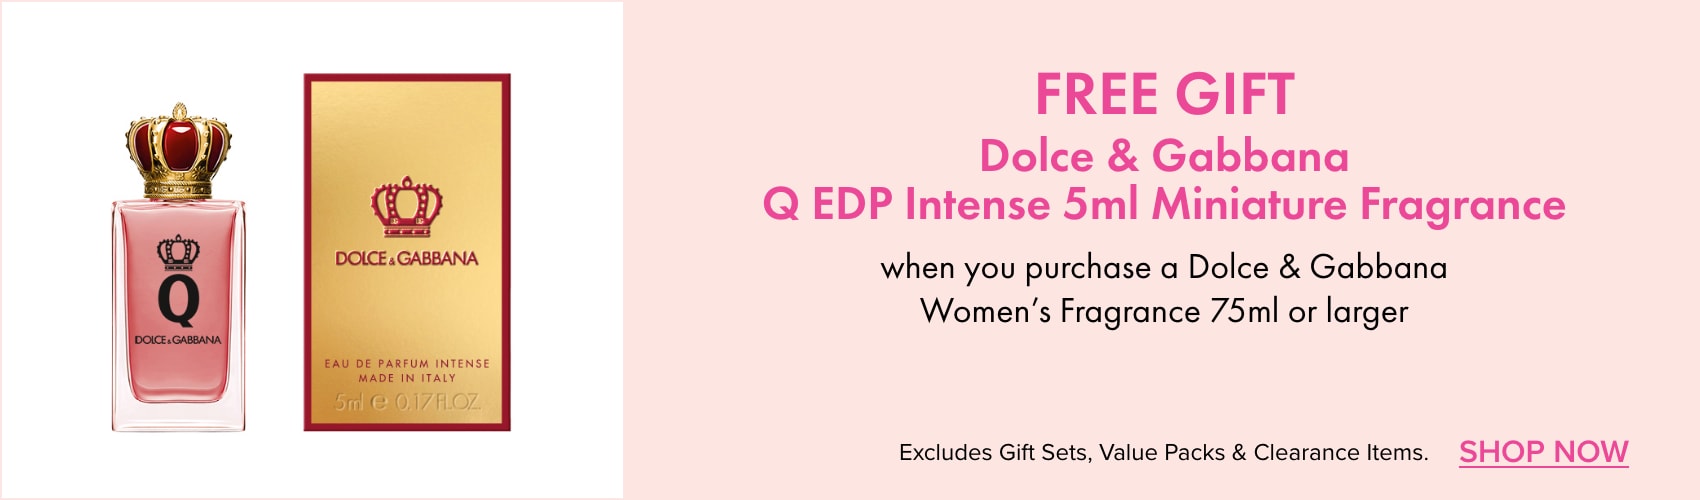 Free Gift Dolce & Gabbana Q EDP Intense 5ml miniature fragrance